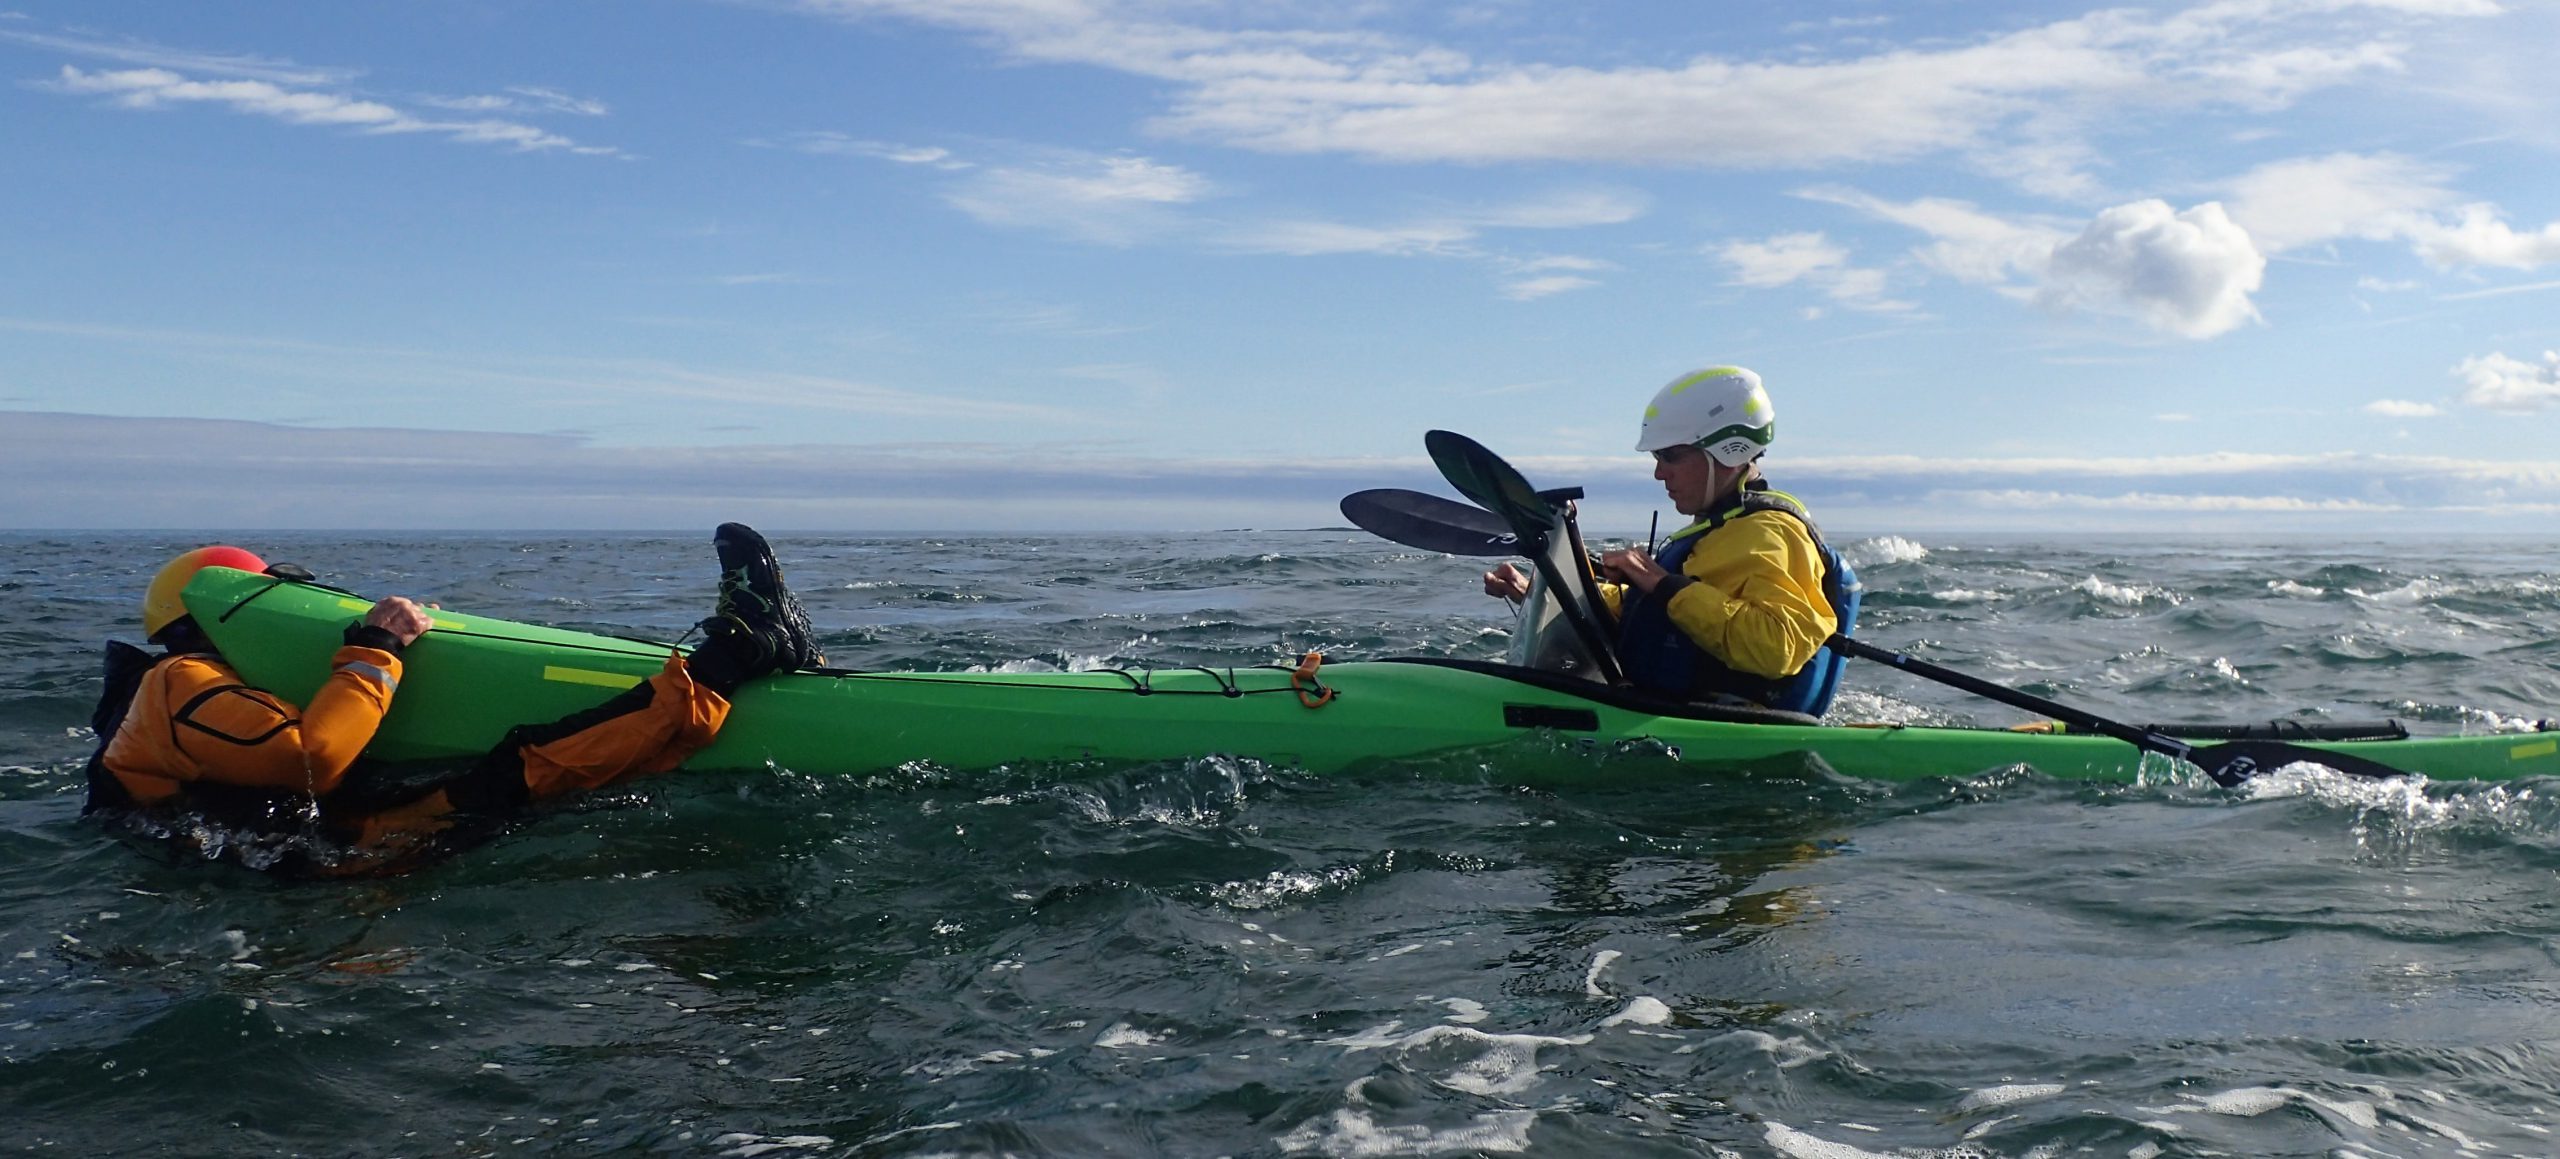 Sea Kayak rescue